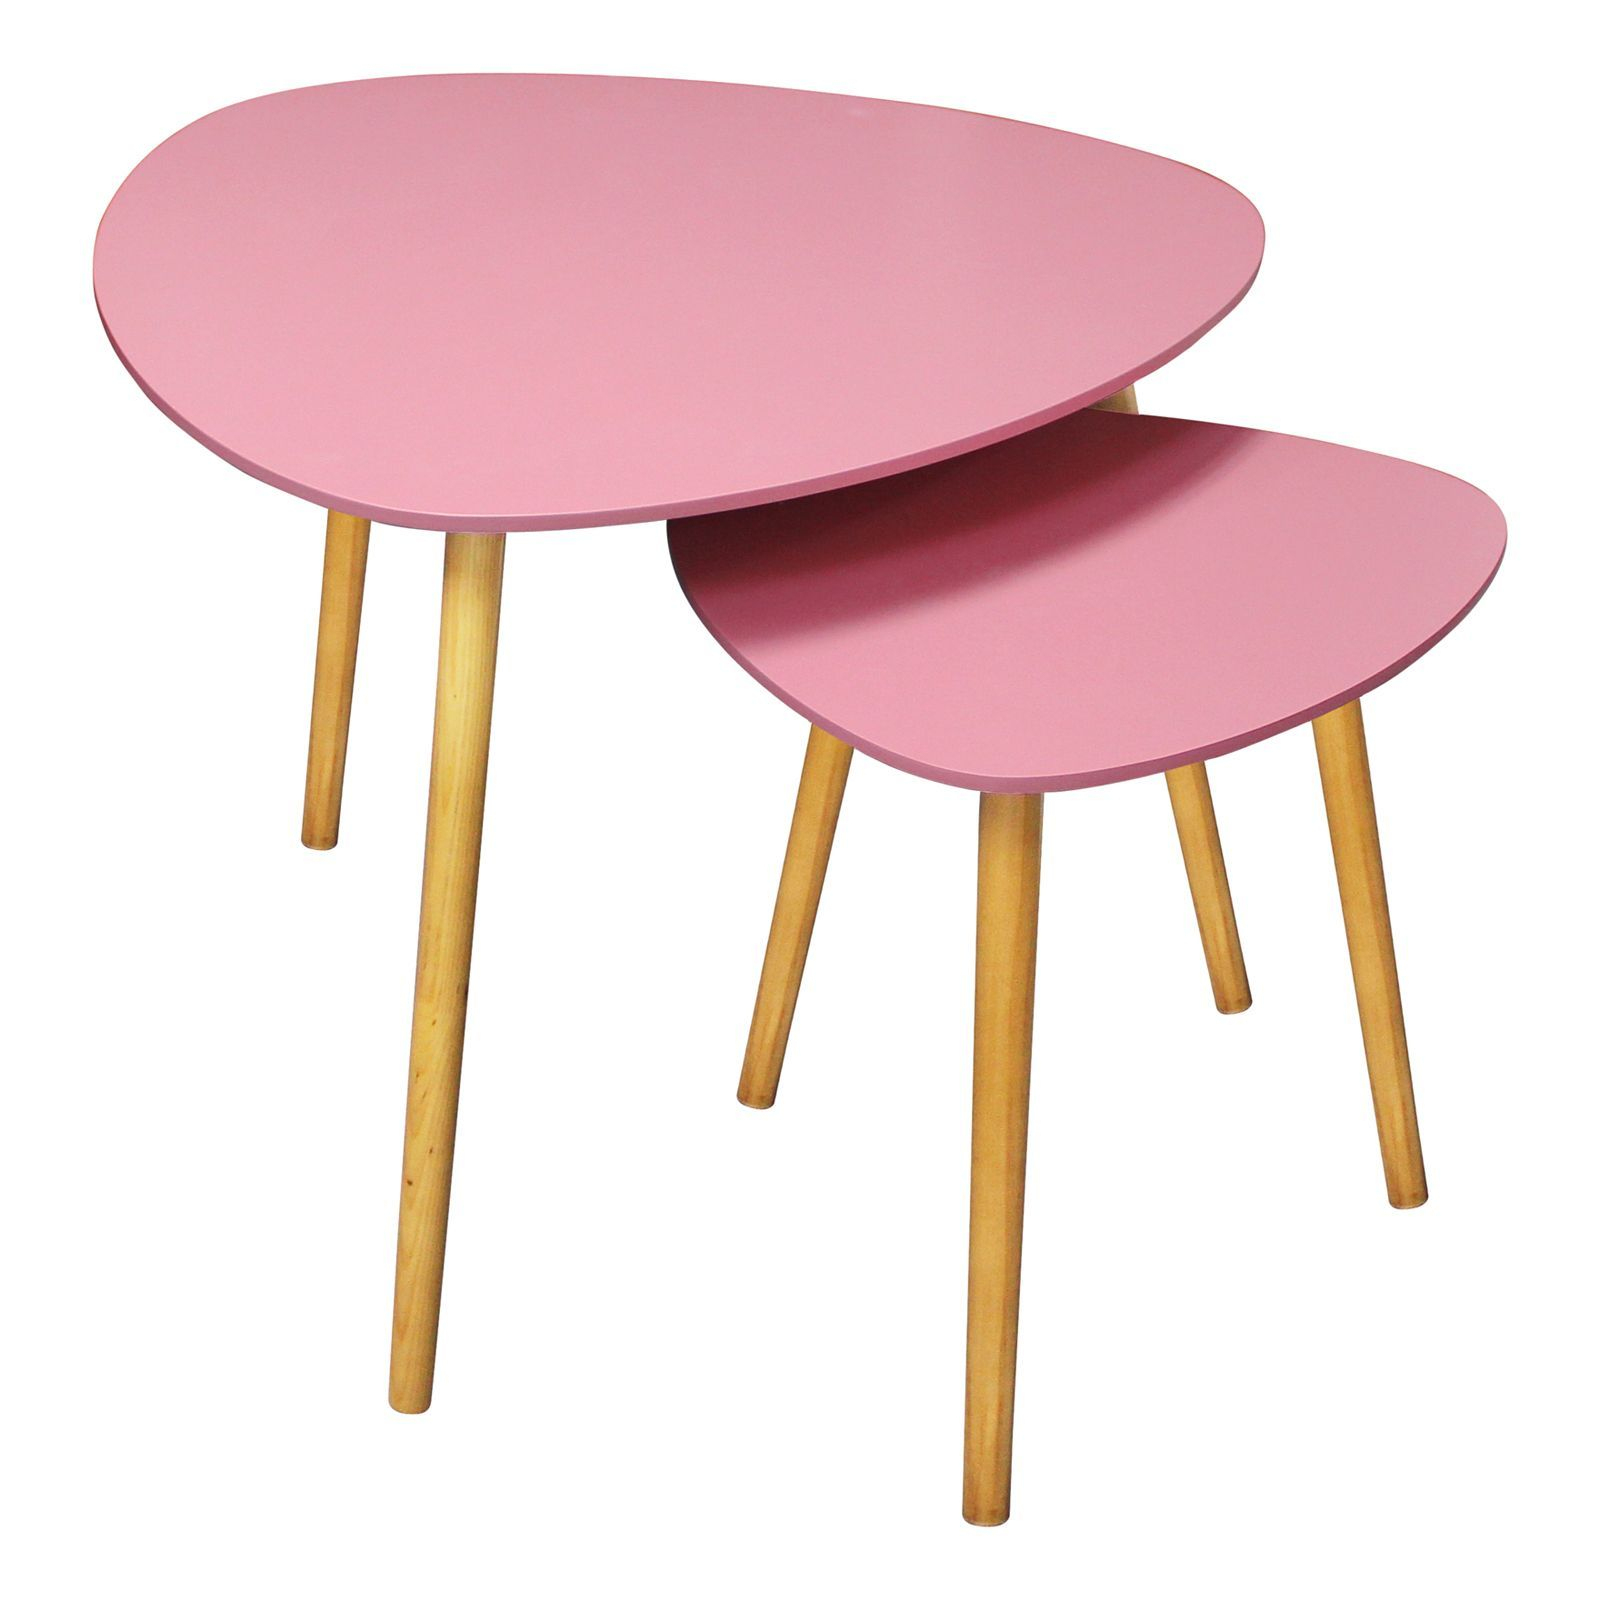 Table Basse Scandinave Potiron - Mobilier Design ... serapportantà Meubles Potiron